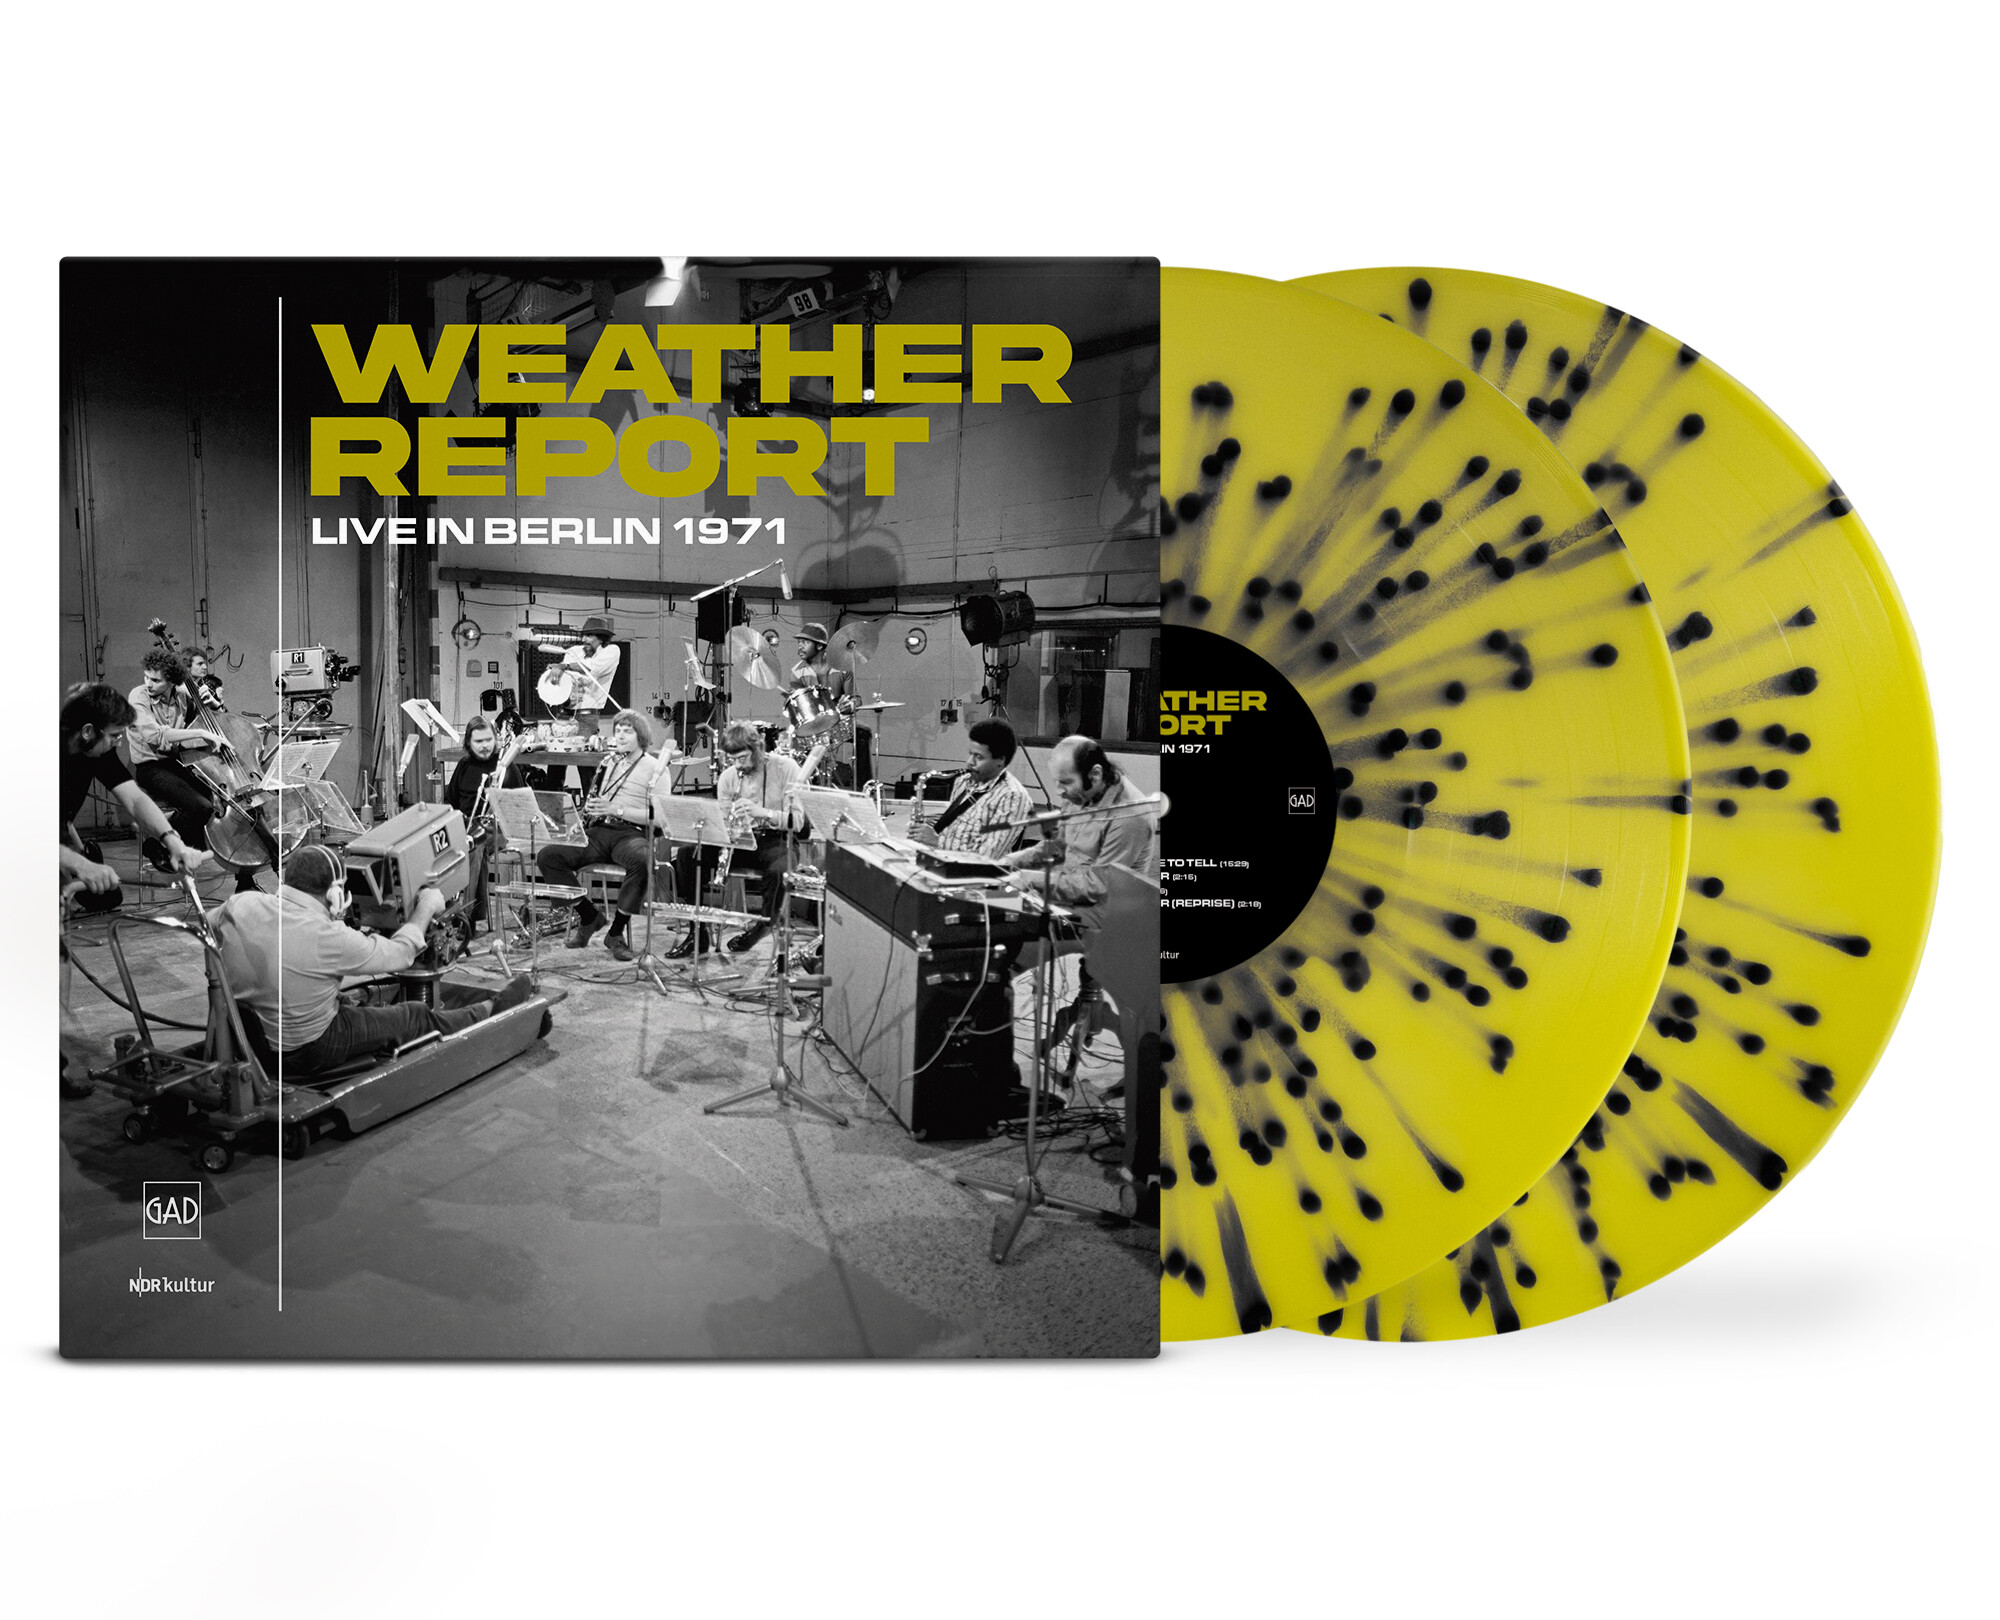 Weather Report - Live In Berlin 1971 - LP - color - GAD Records version (1).jpg